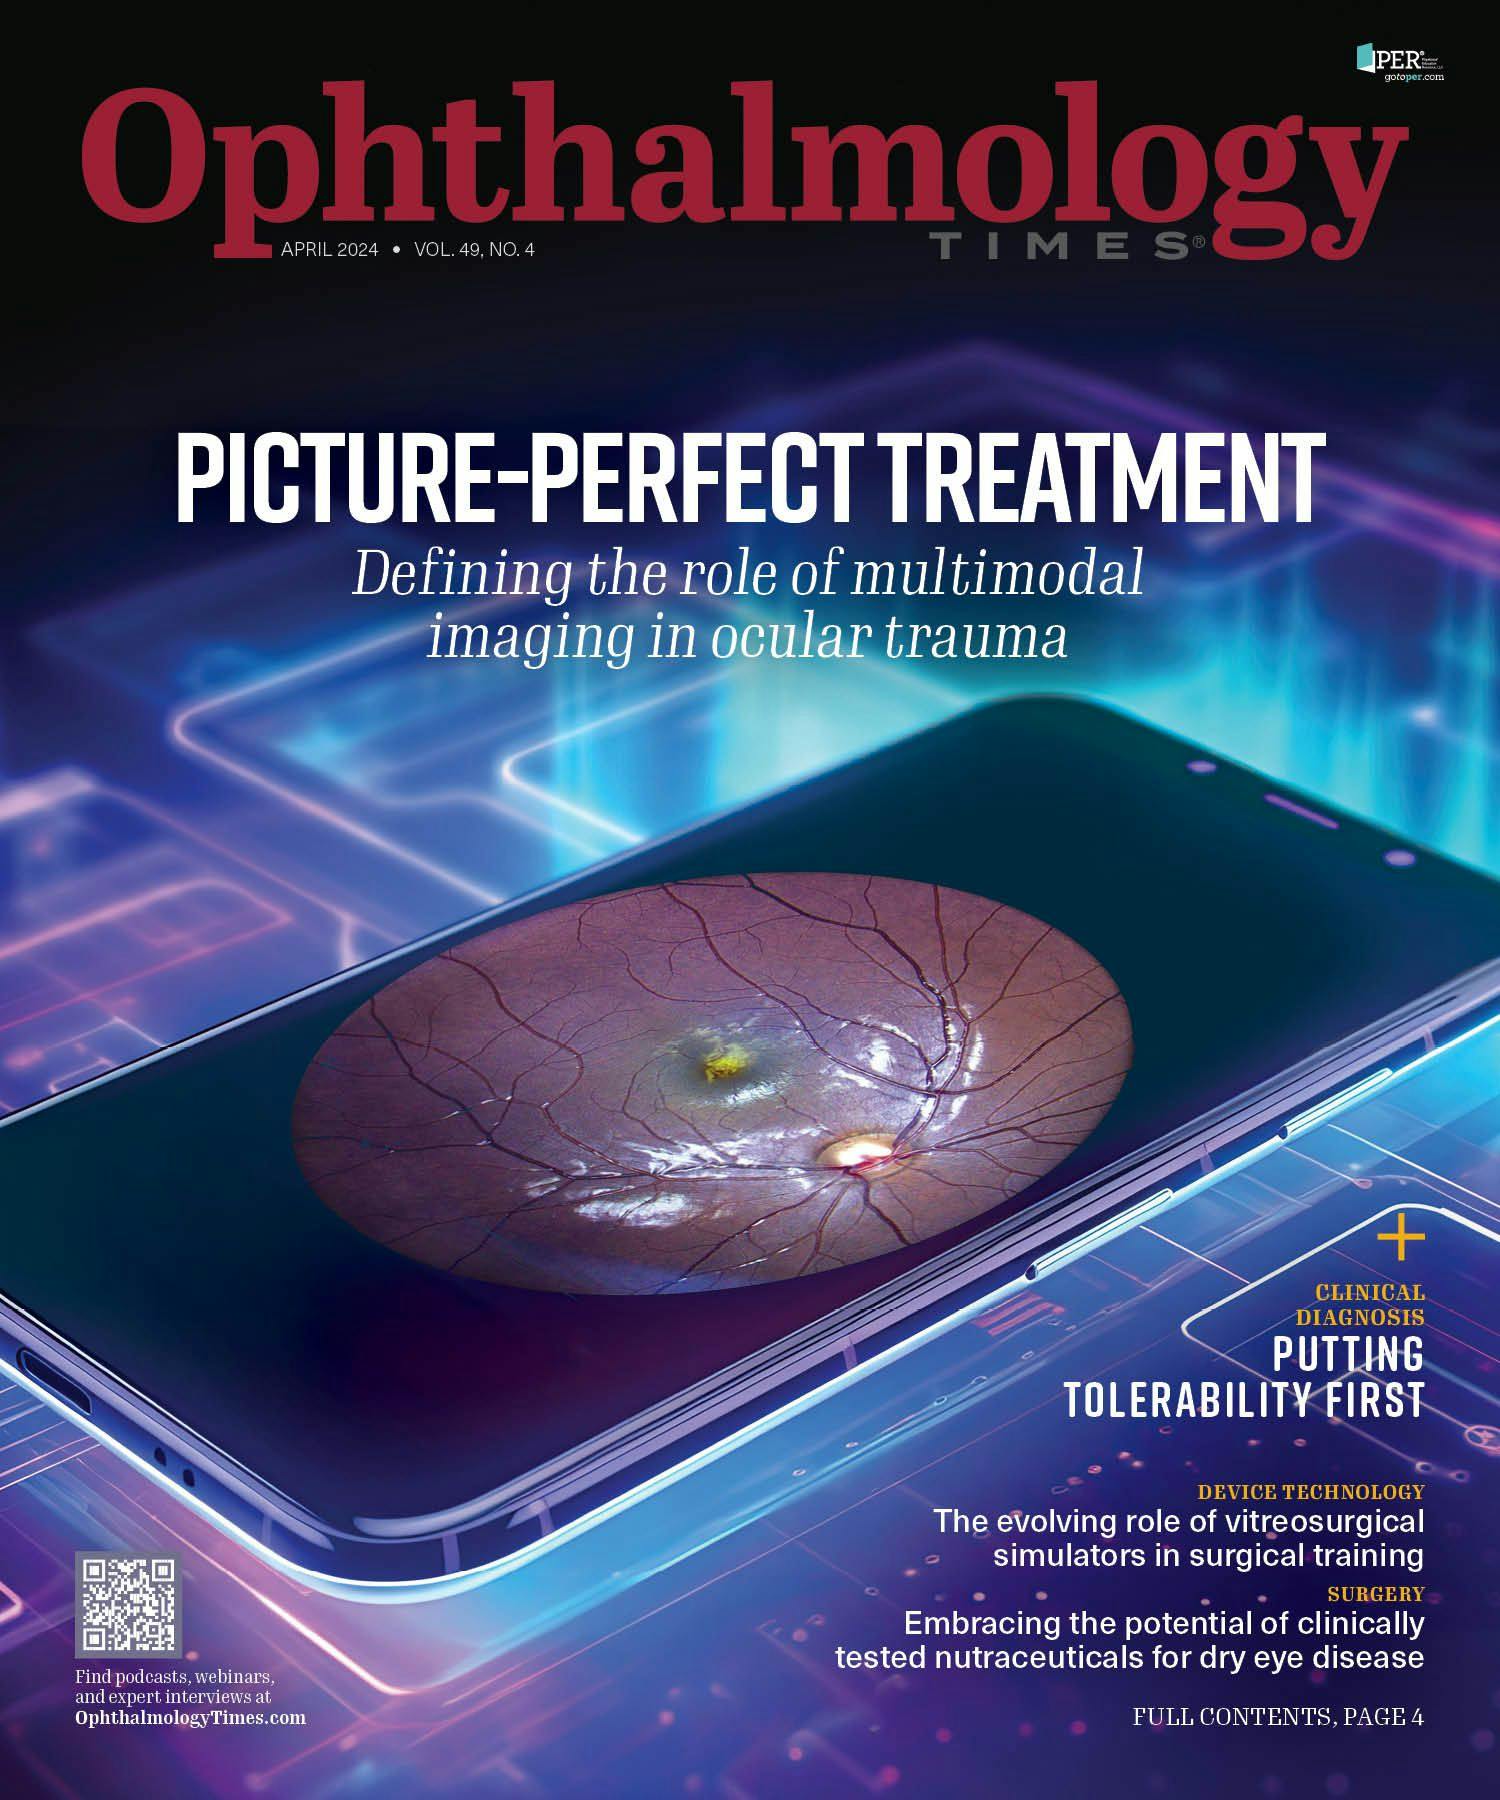 Ophthalmology Times: April 2024